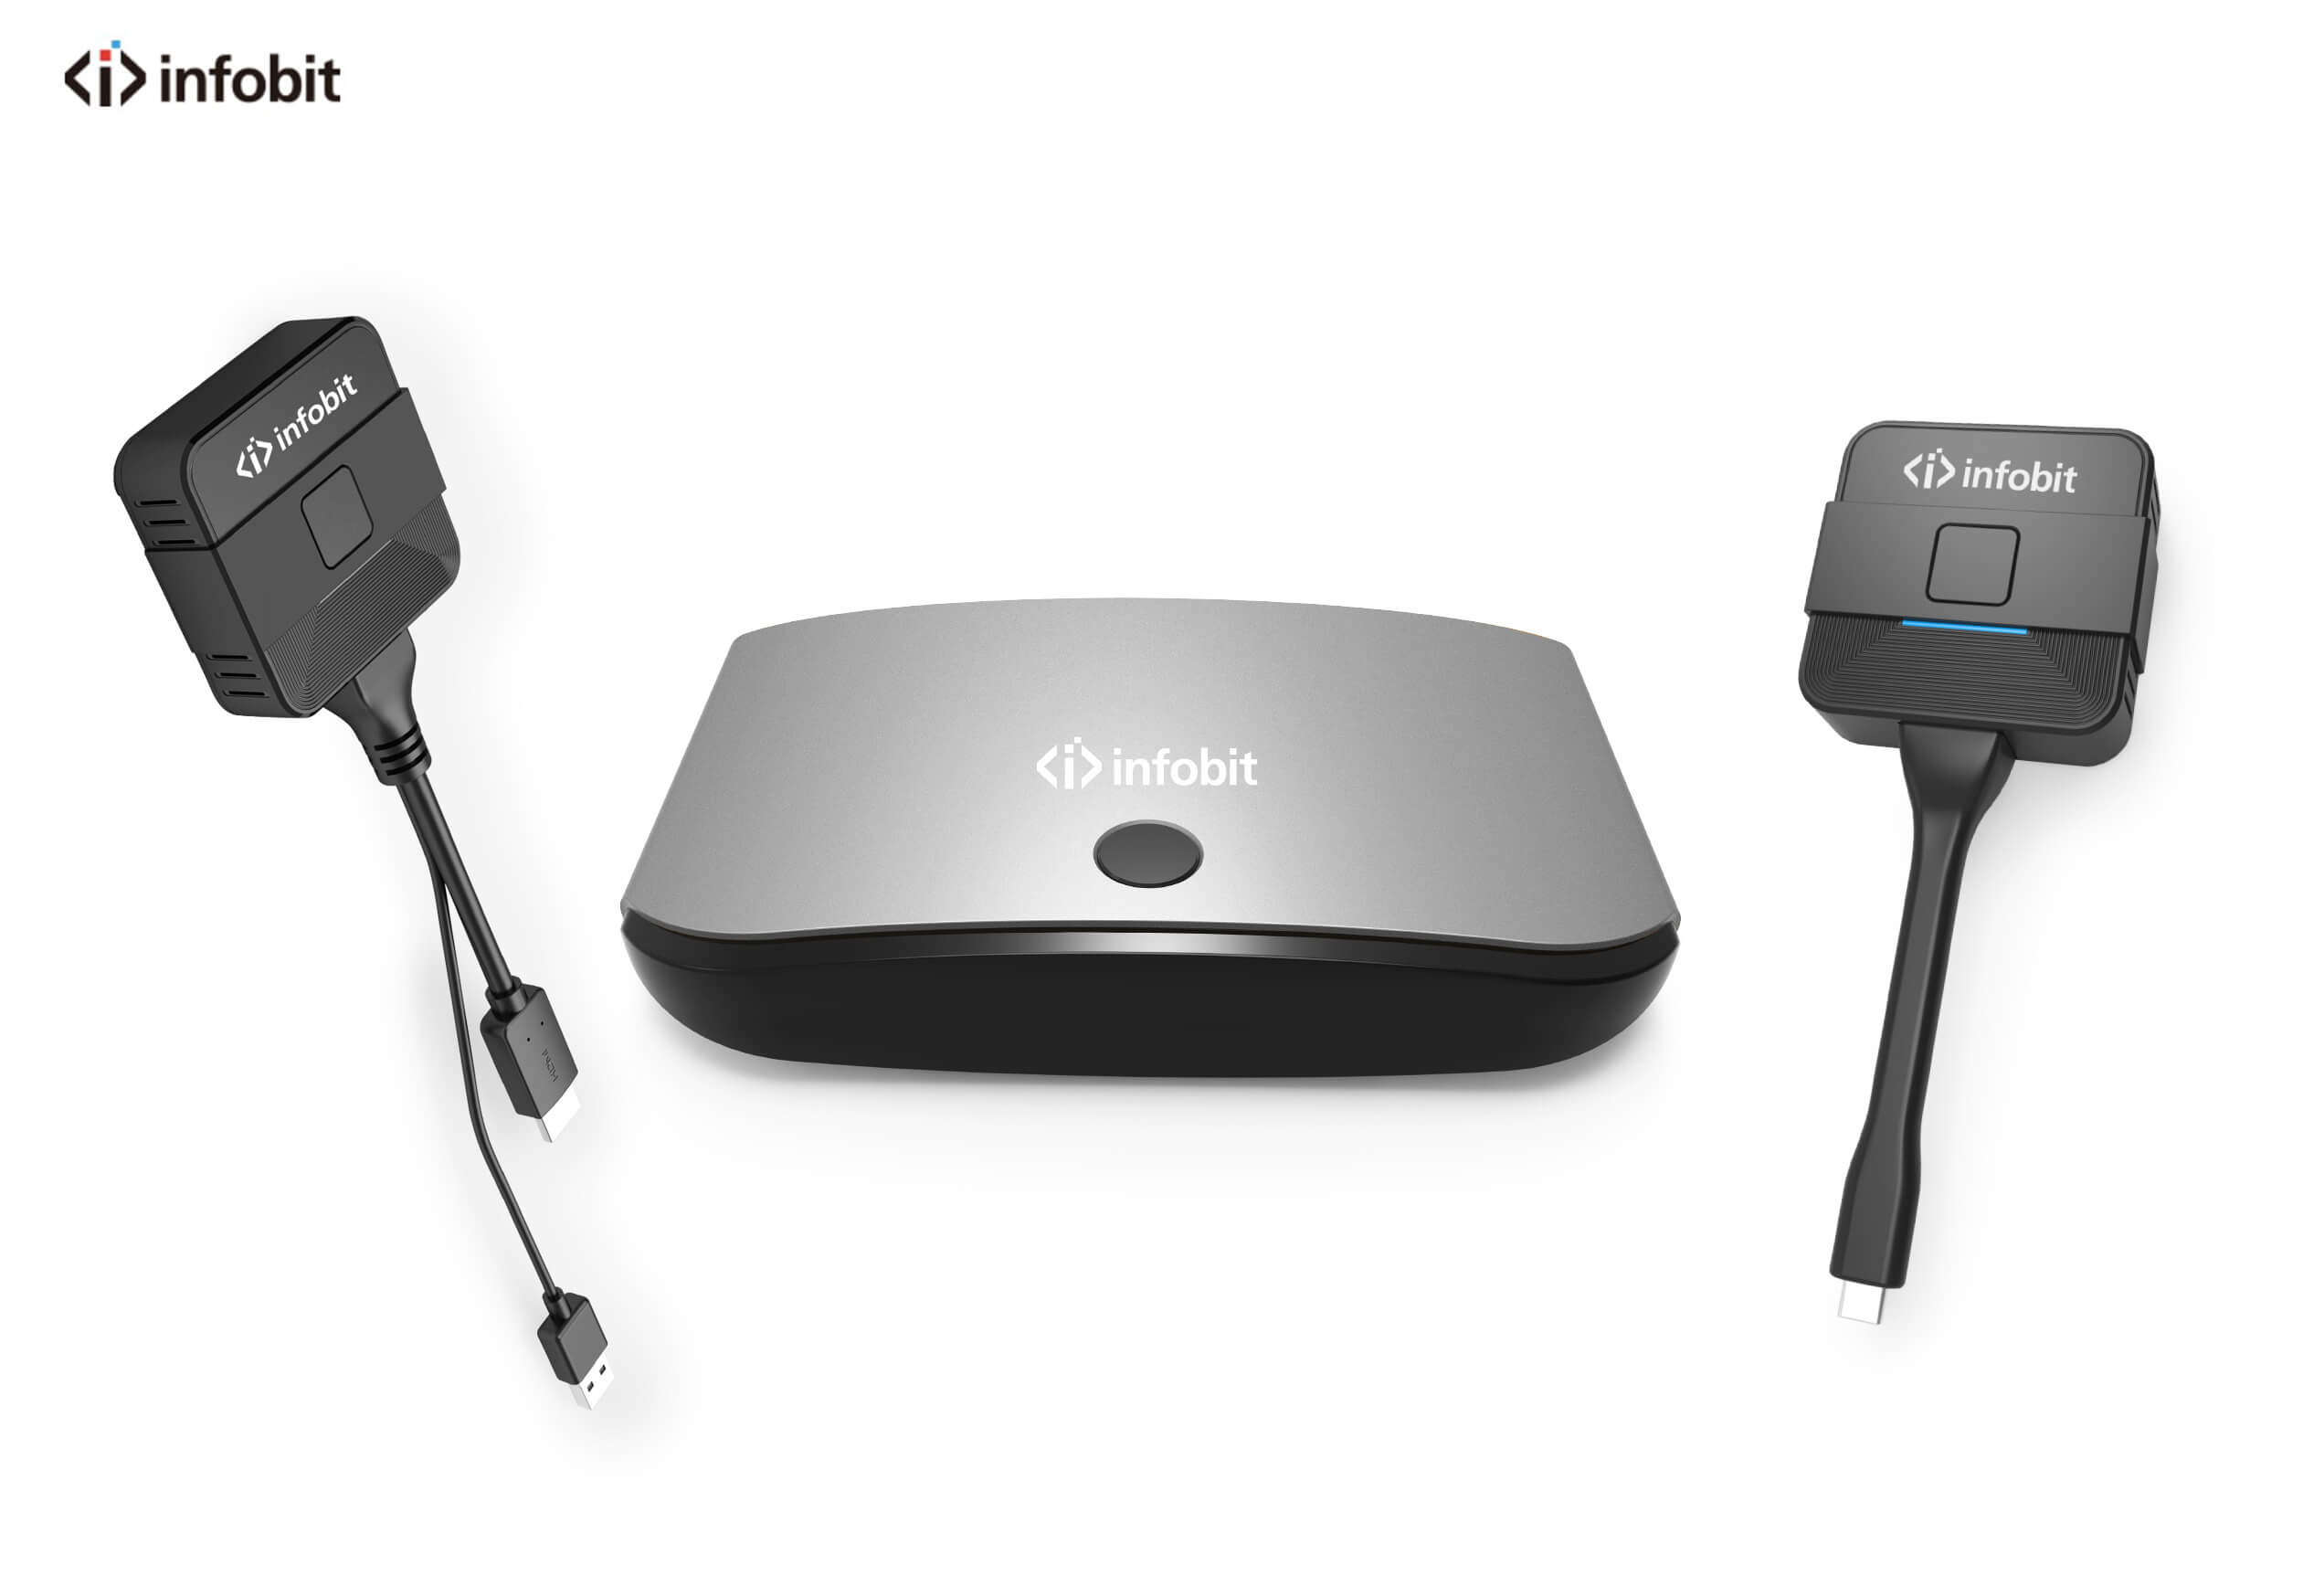 Receiver de prezentare/colaborare wireless Infobit iShare E400 4K, TouchBack control, 16 users, AirPlay, MiraCast